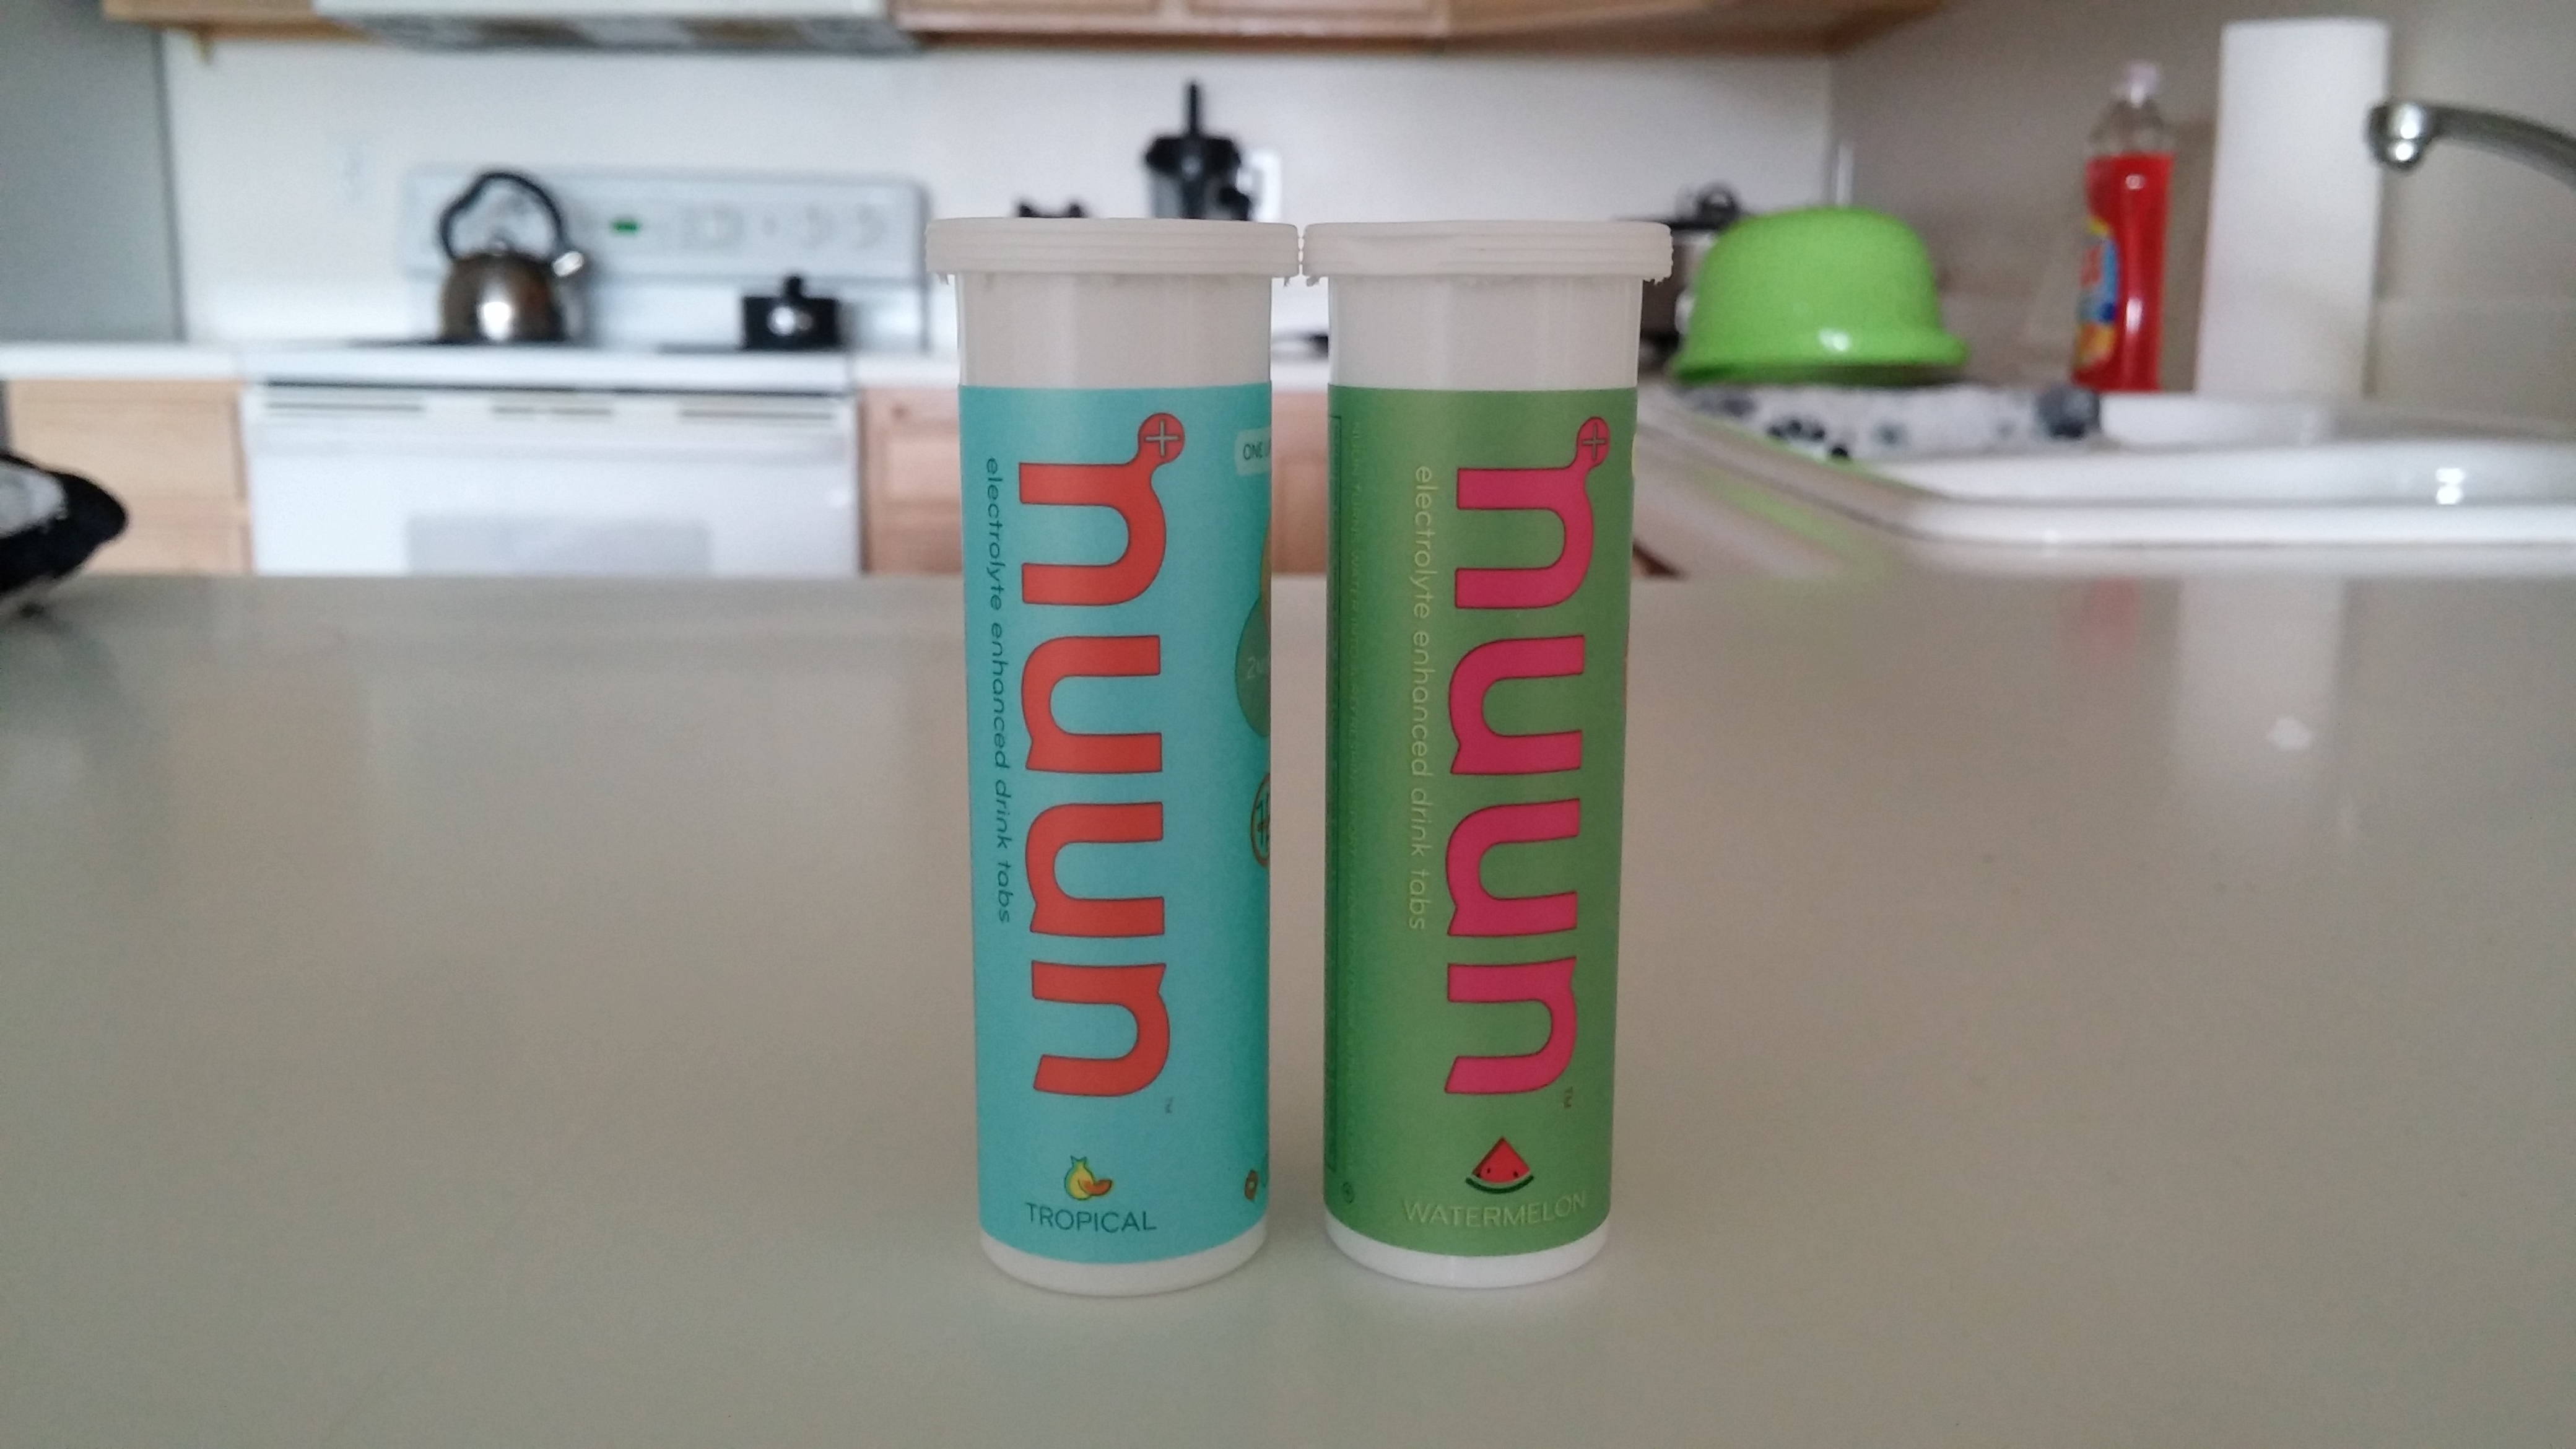 nuun hydration tablets